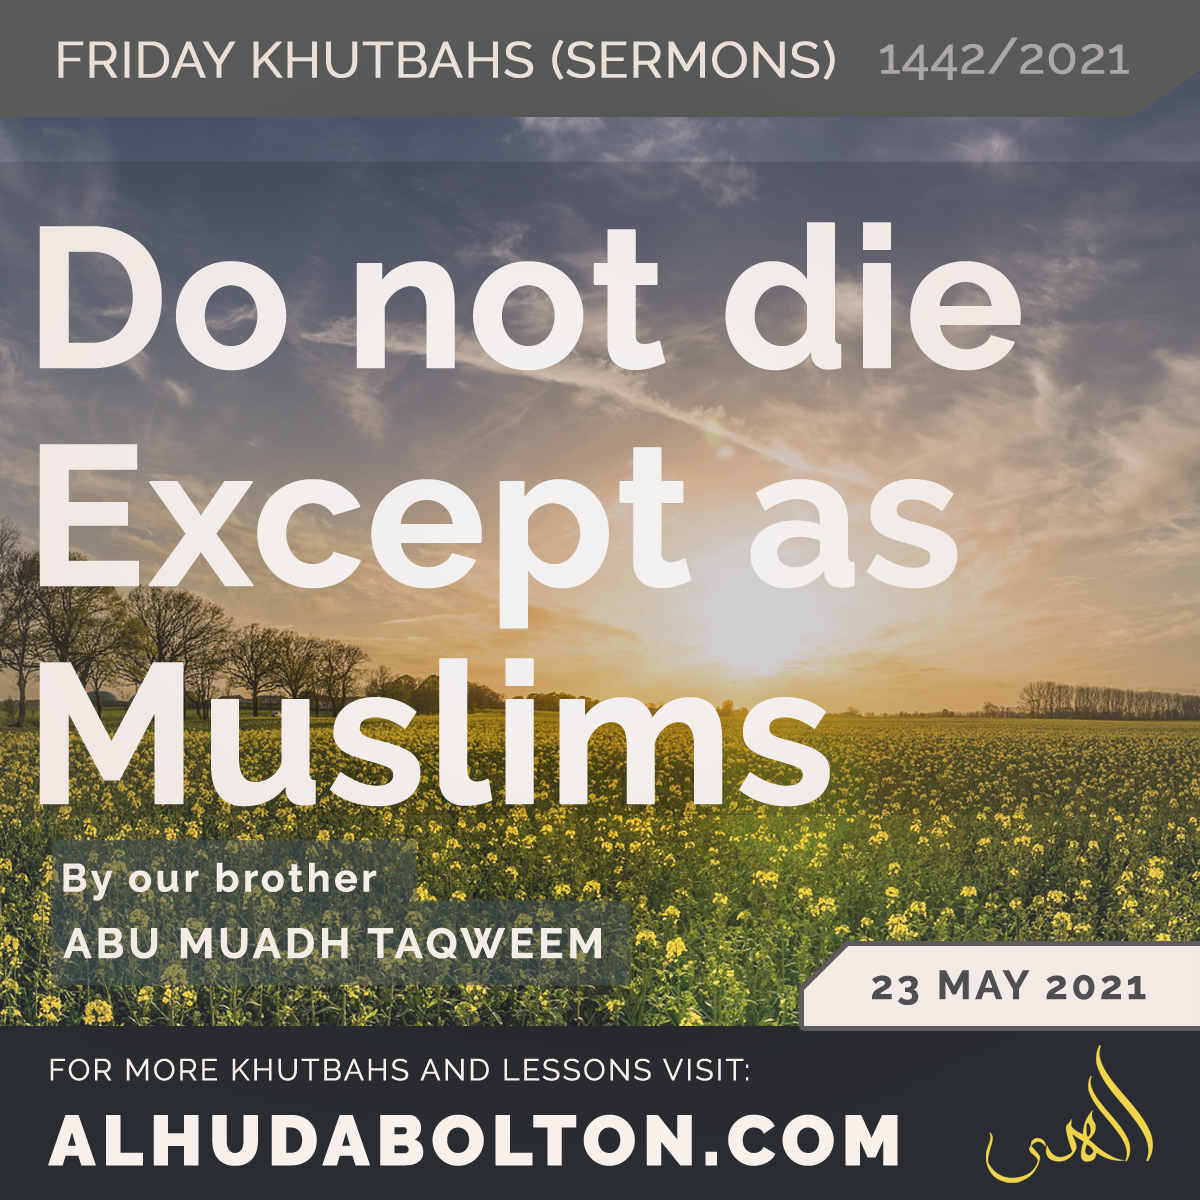 Khutbah: Do not die except as Muslims